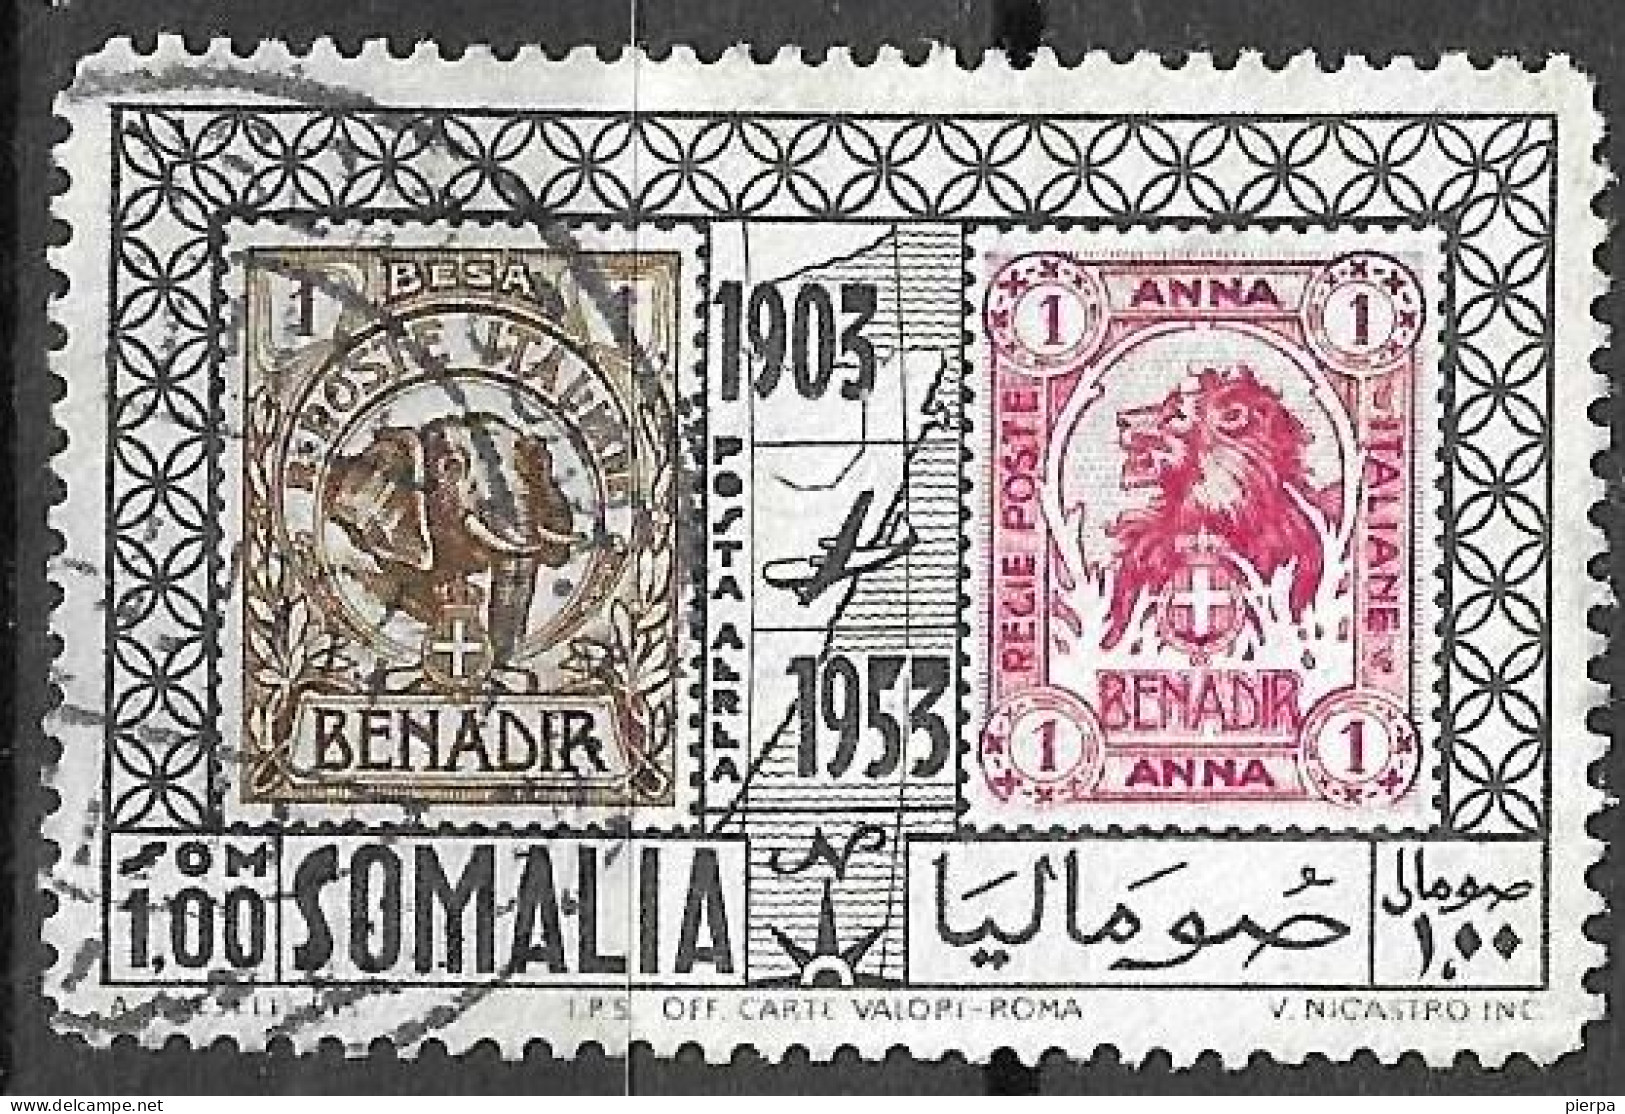 SOMALIA A.F.I.S. - 1953 - POSTA AEREA -50° FRANCOBOLLO - SOMALI 1,00 - USATO (YVERT AV 46 - MICHEL 287 - SS A 19) - Somalia (AFIS)